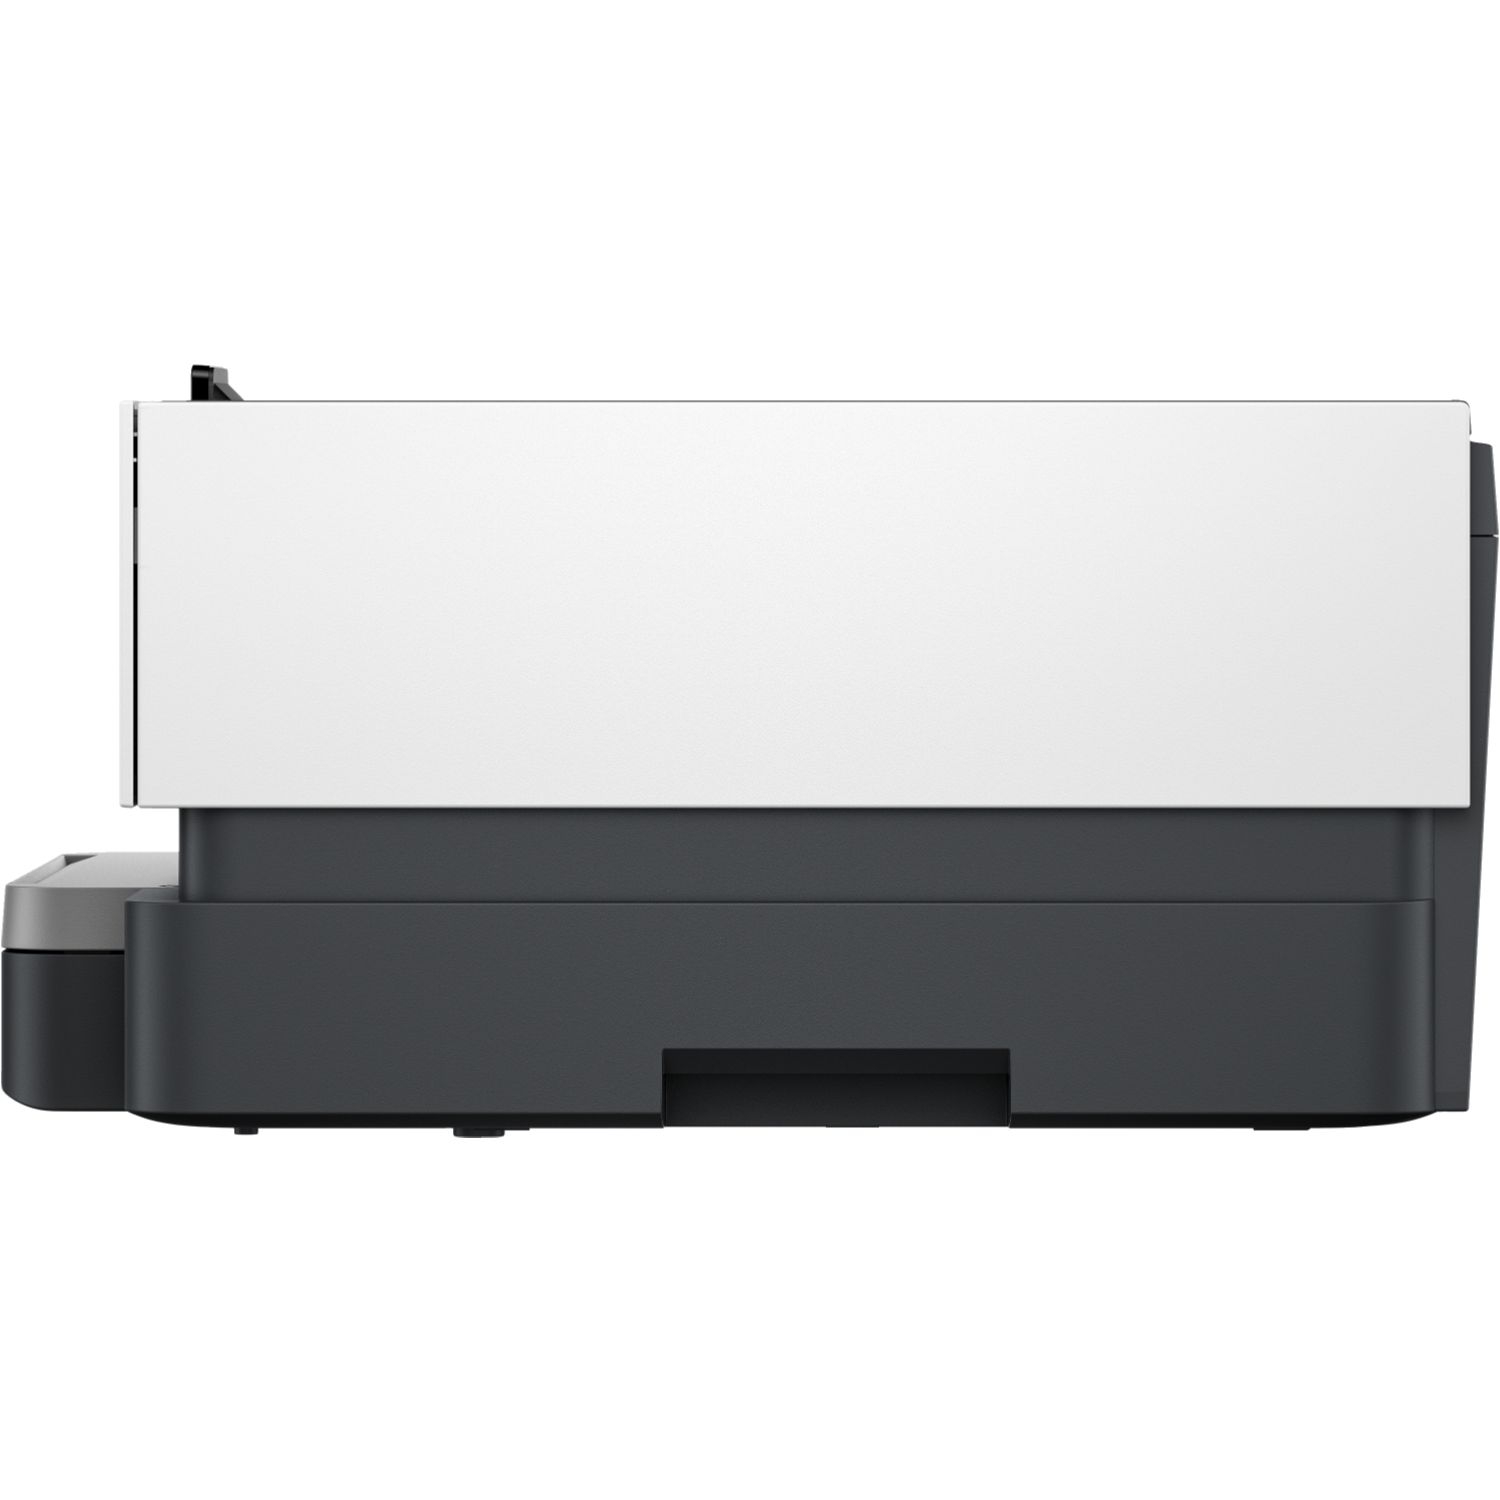 5A0S3B - Impresora HP OfficeJet Pro 9110b Wifi Color, cartucho HP 937. (5A0S3B)